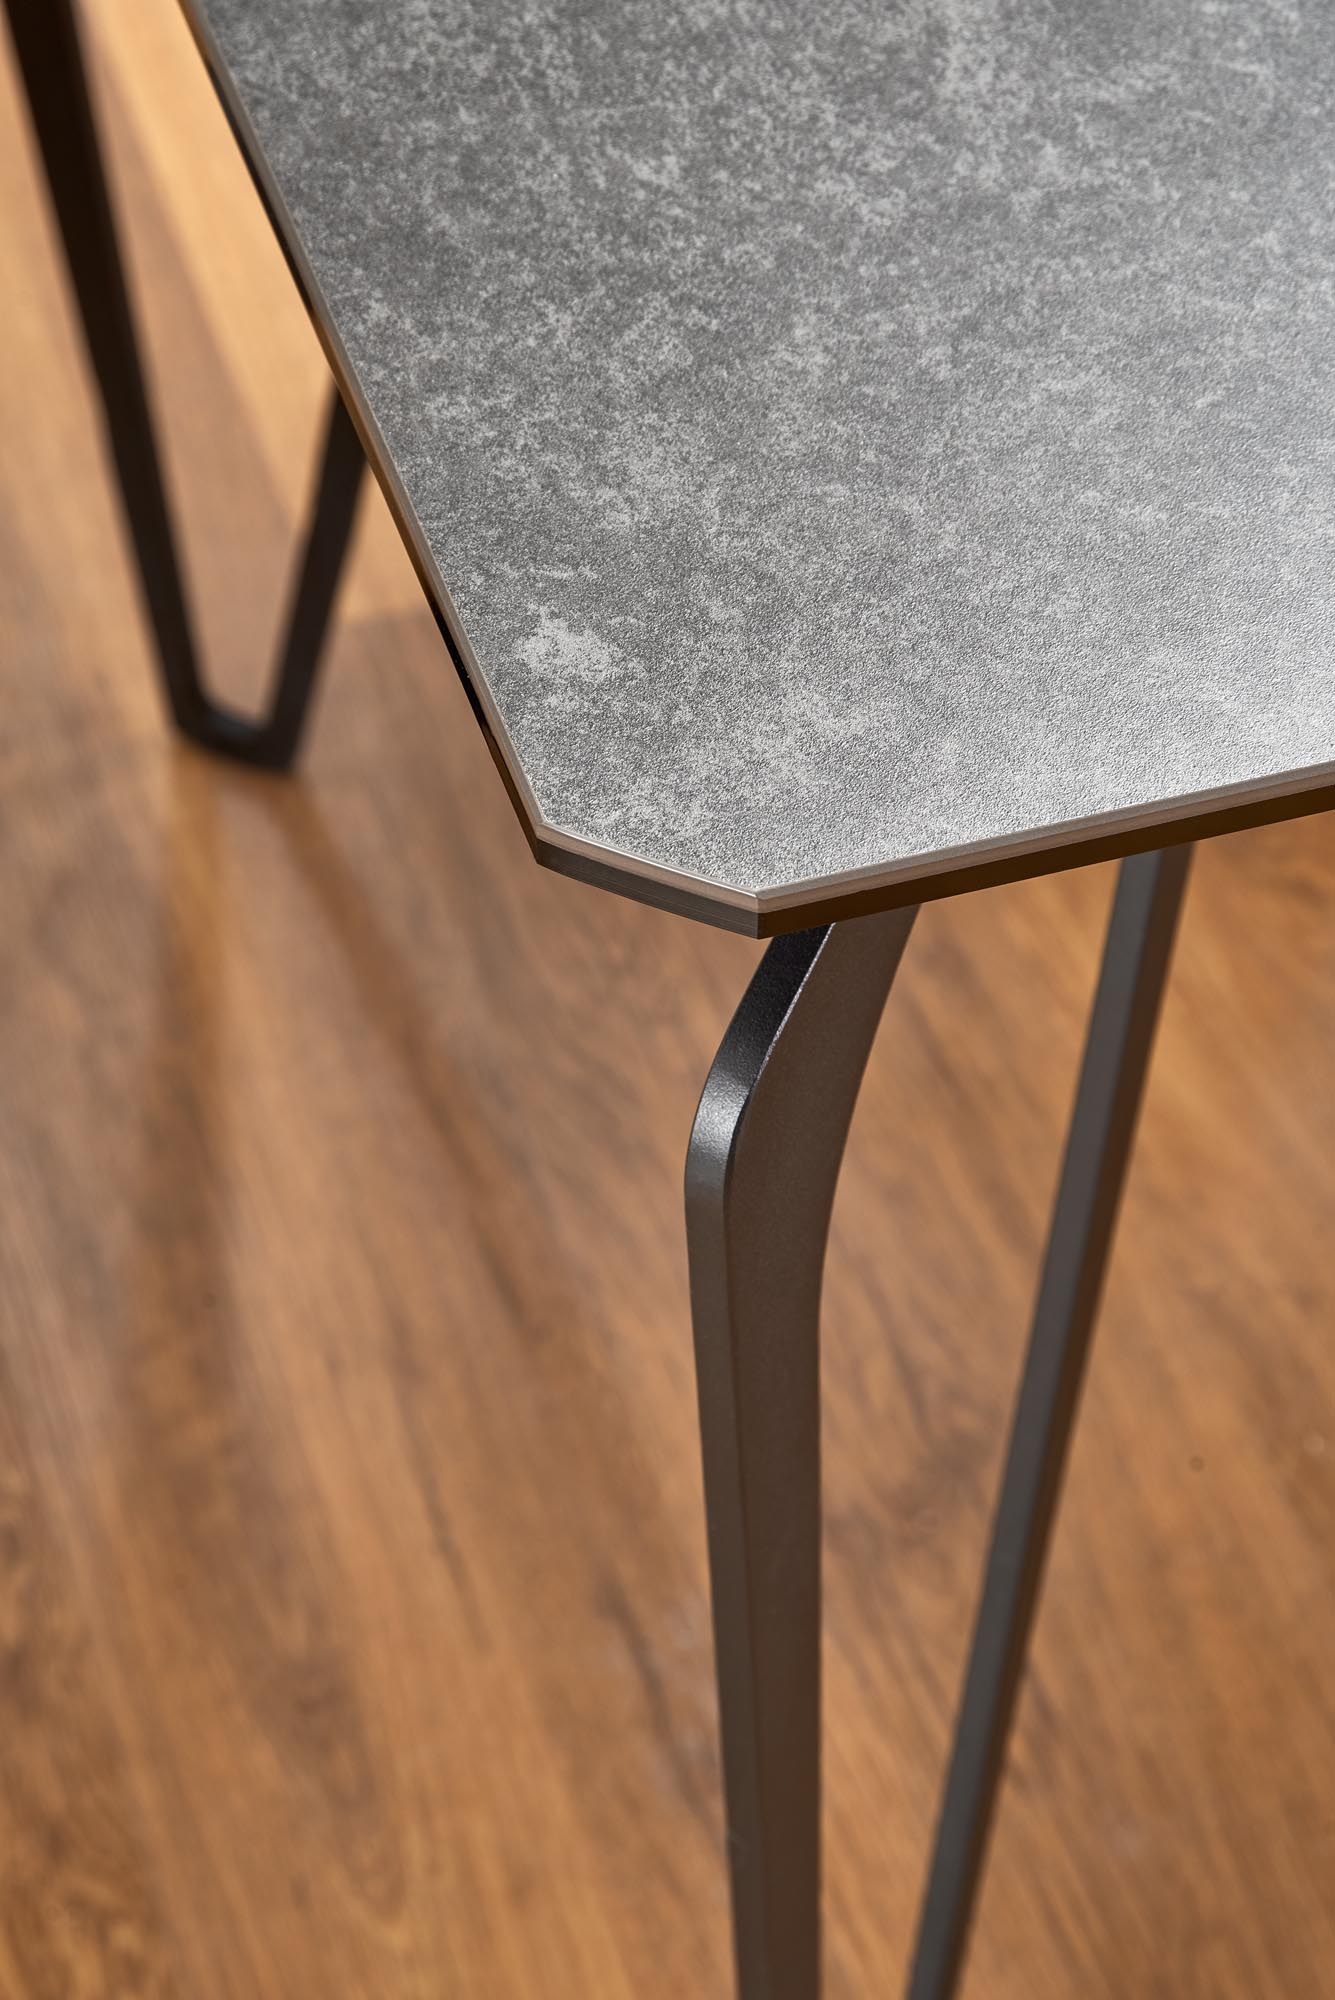 Стол обеденный модерн PL- Halmar GREYSON (стекло+керамика)